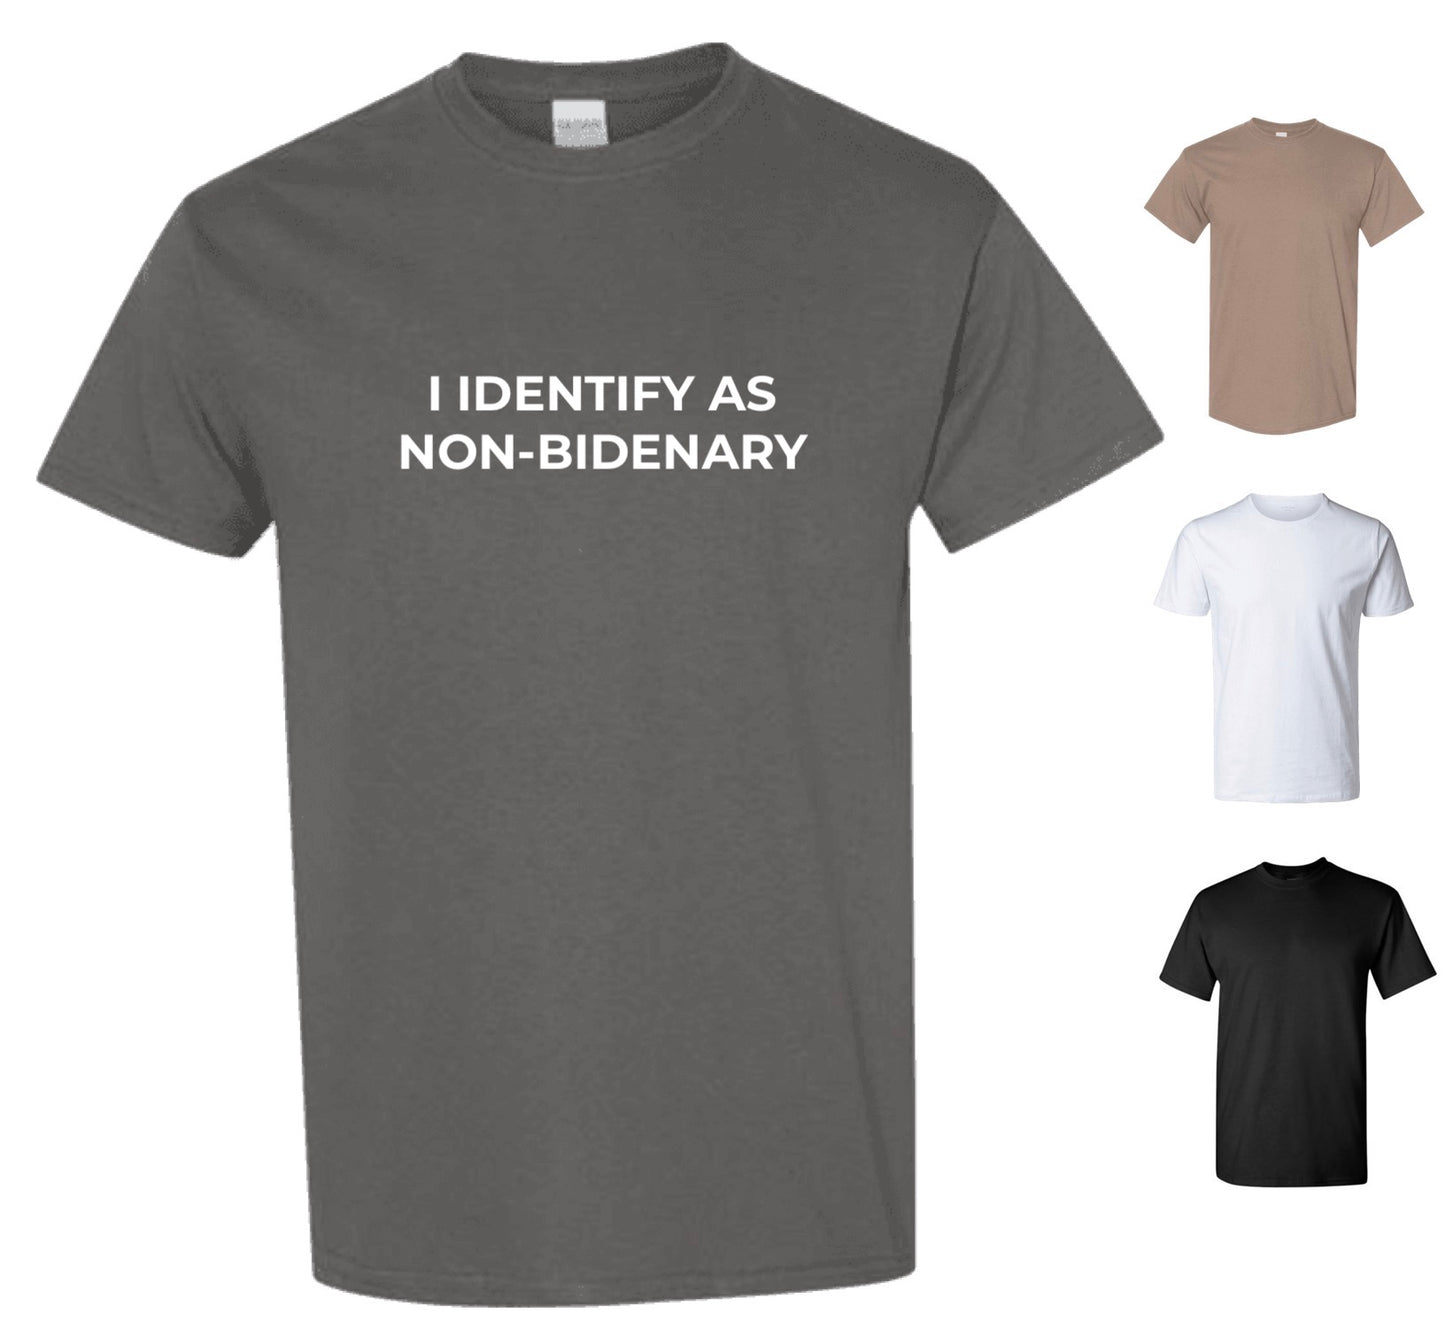 I Identify As Non-Bidenary T-Shirt (with FREE Shipping)